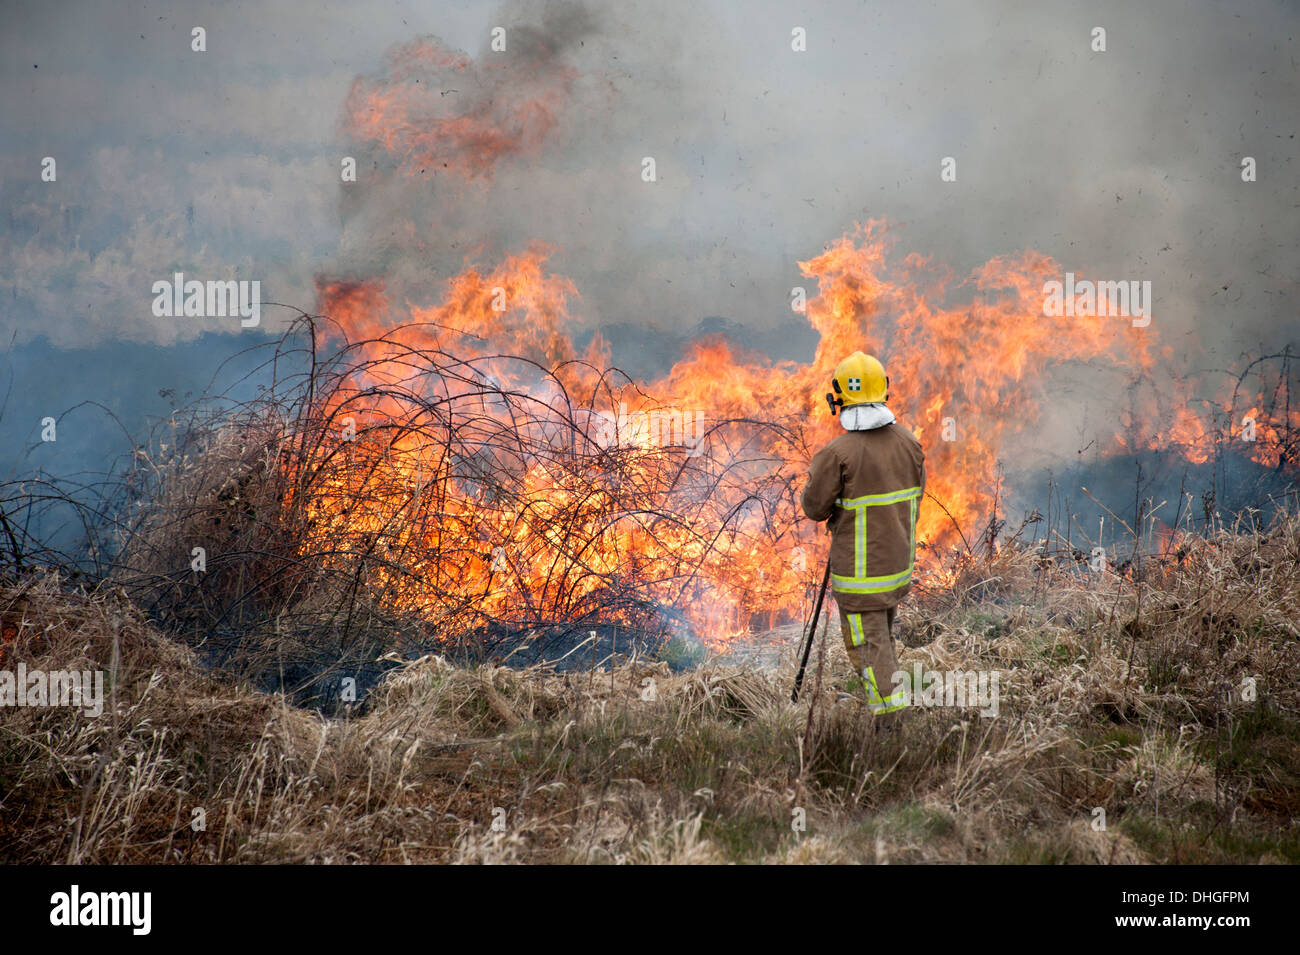 Firefighter using Beaters on Grass Fire Heathland Stock Photo